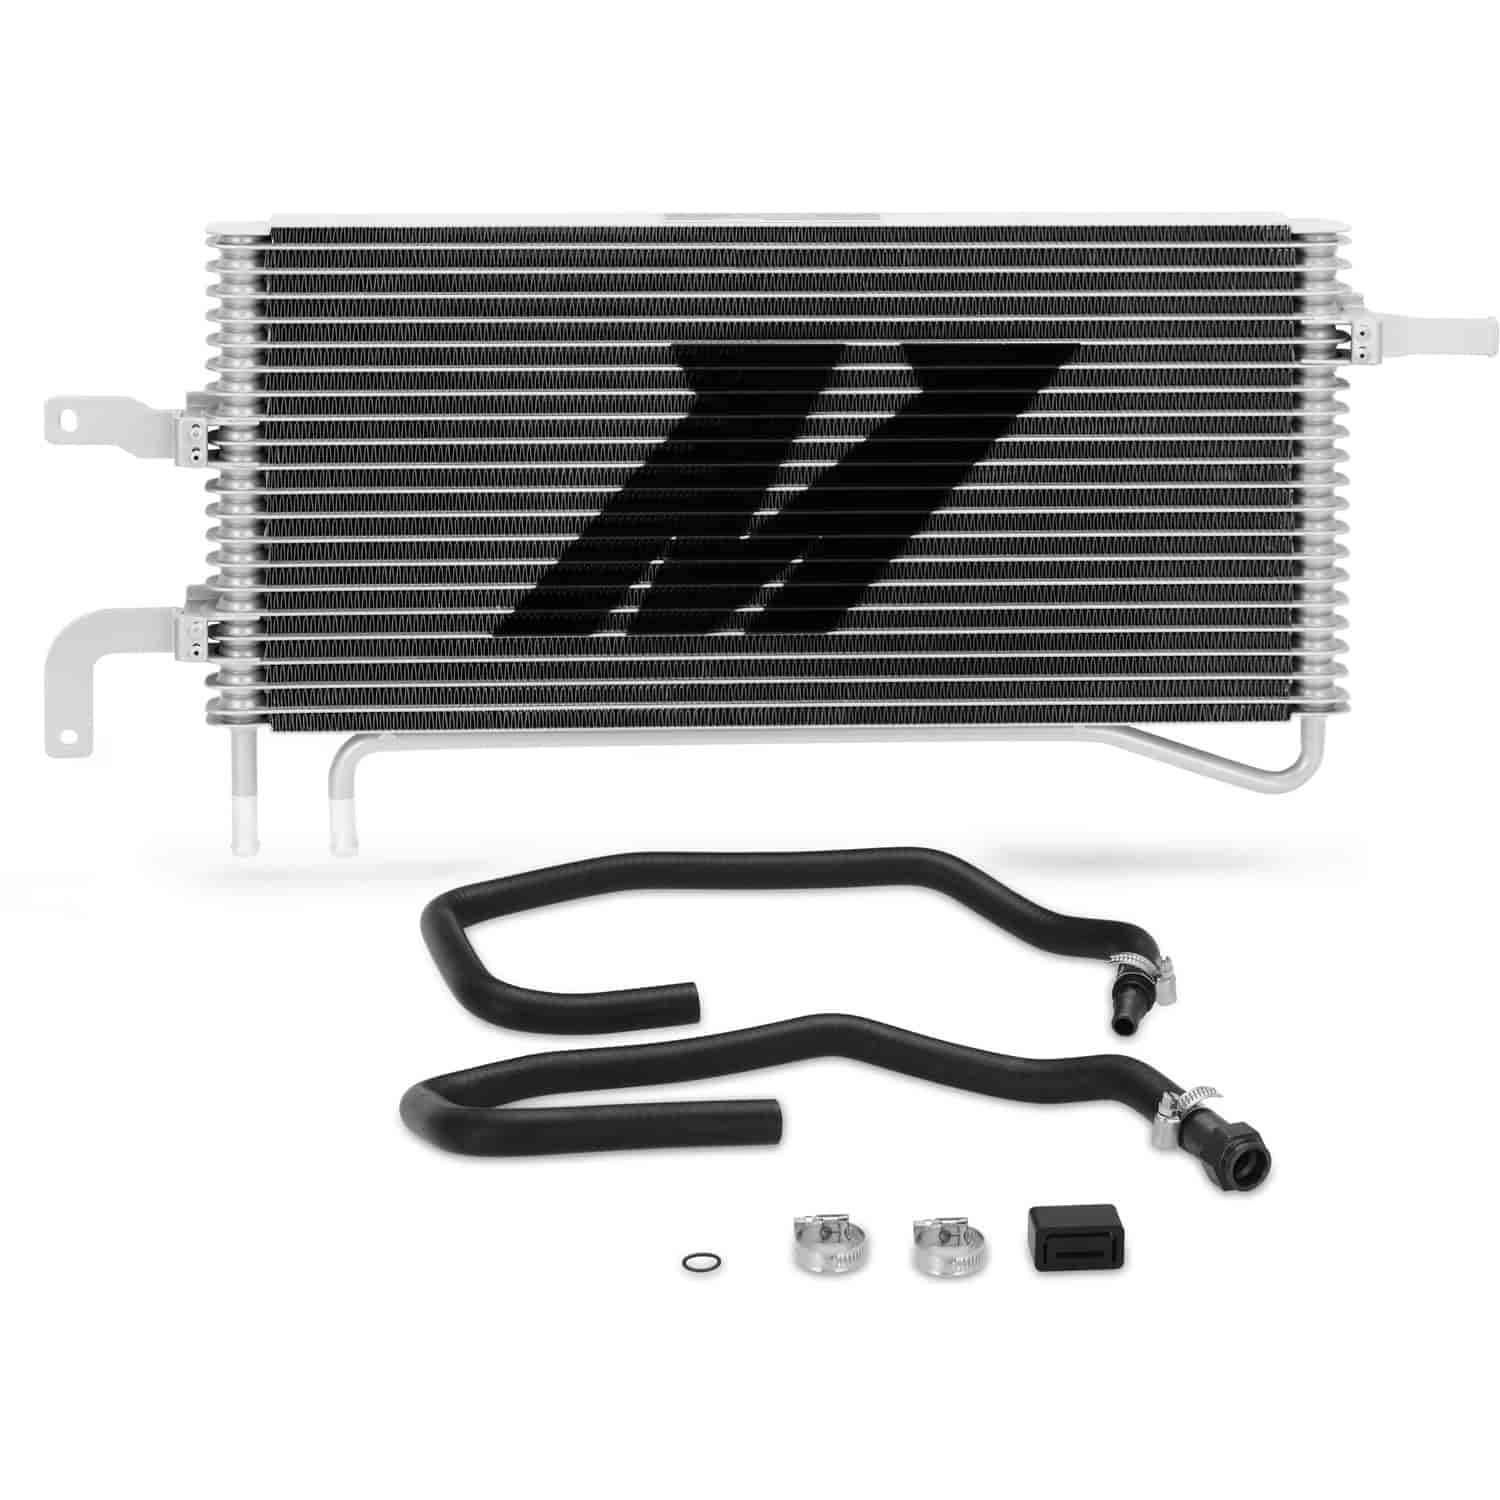 Transmission Fluid Cooler for 2015-2017 Ford Mustang GT V6/V8 [Automatic Only]